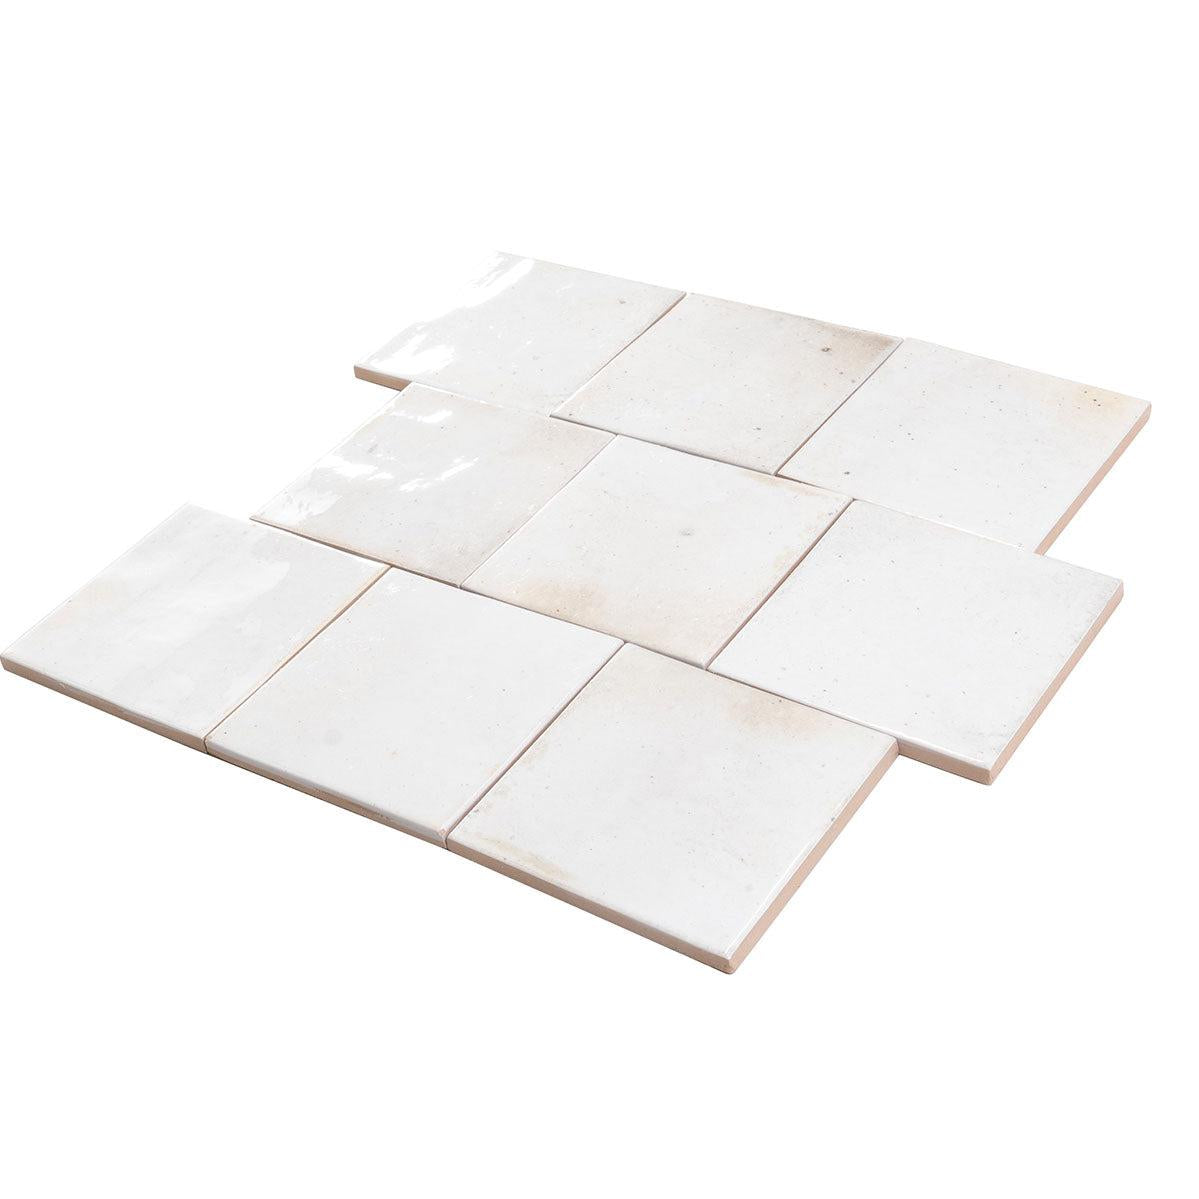 Luna White 4x4 Ceramic Square Tiles